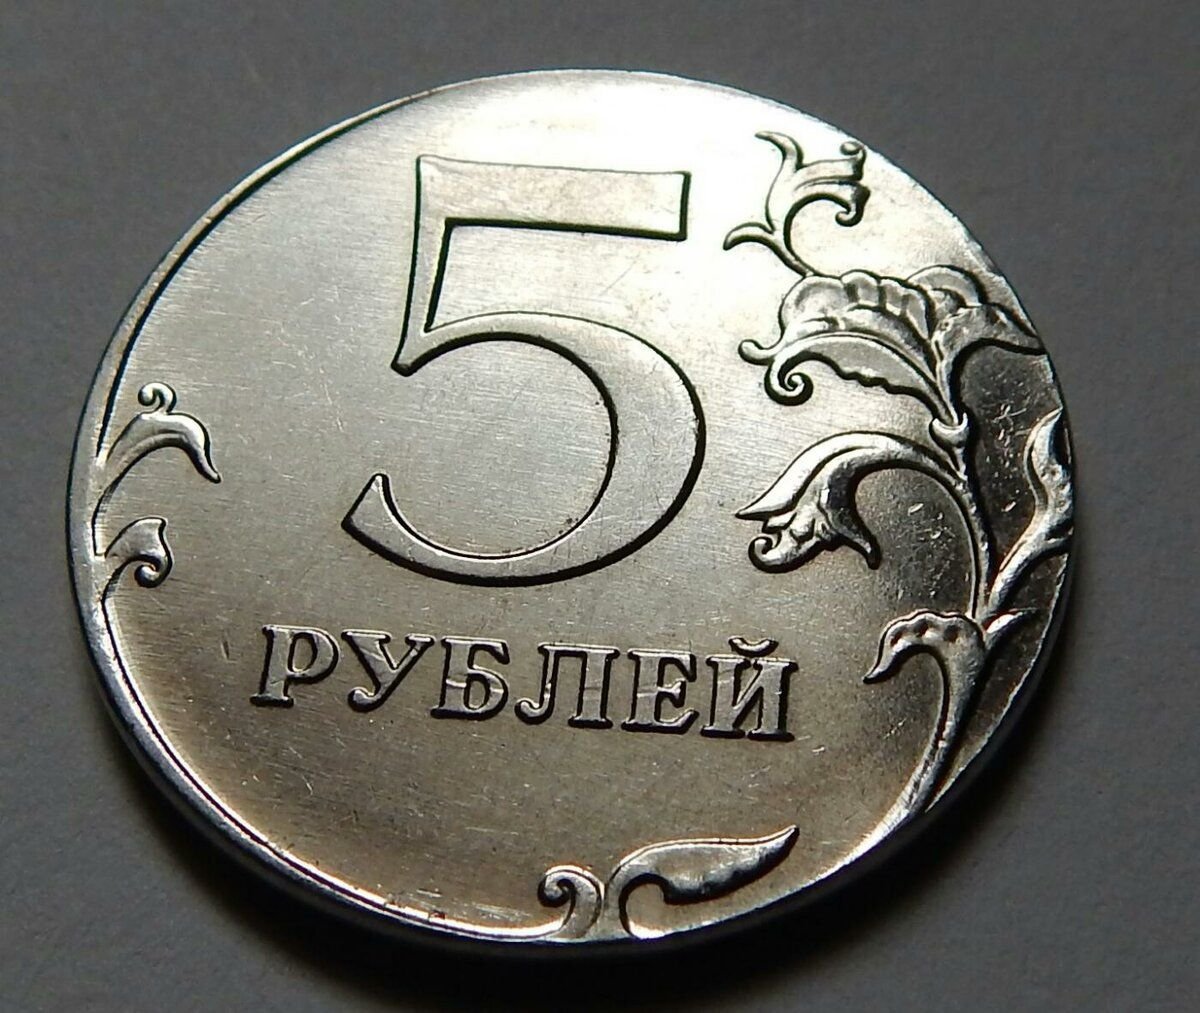 5 рублей сутки